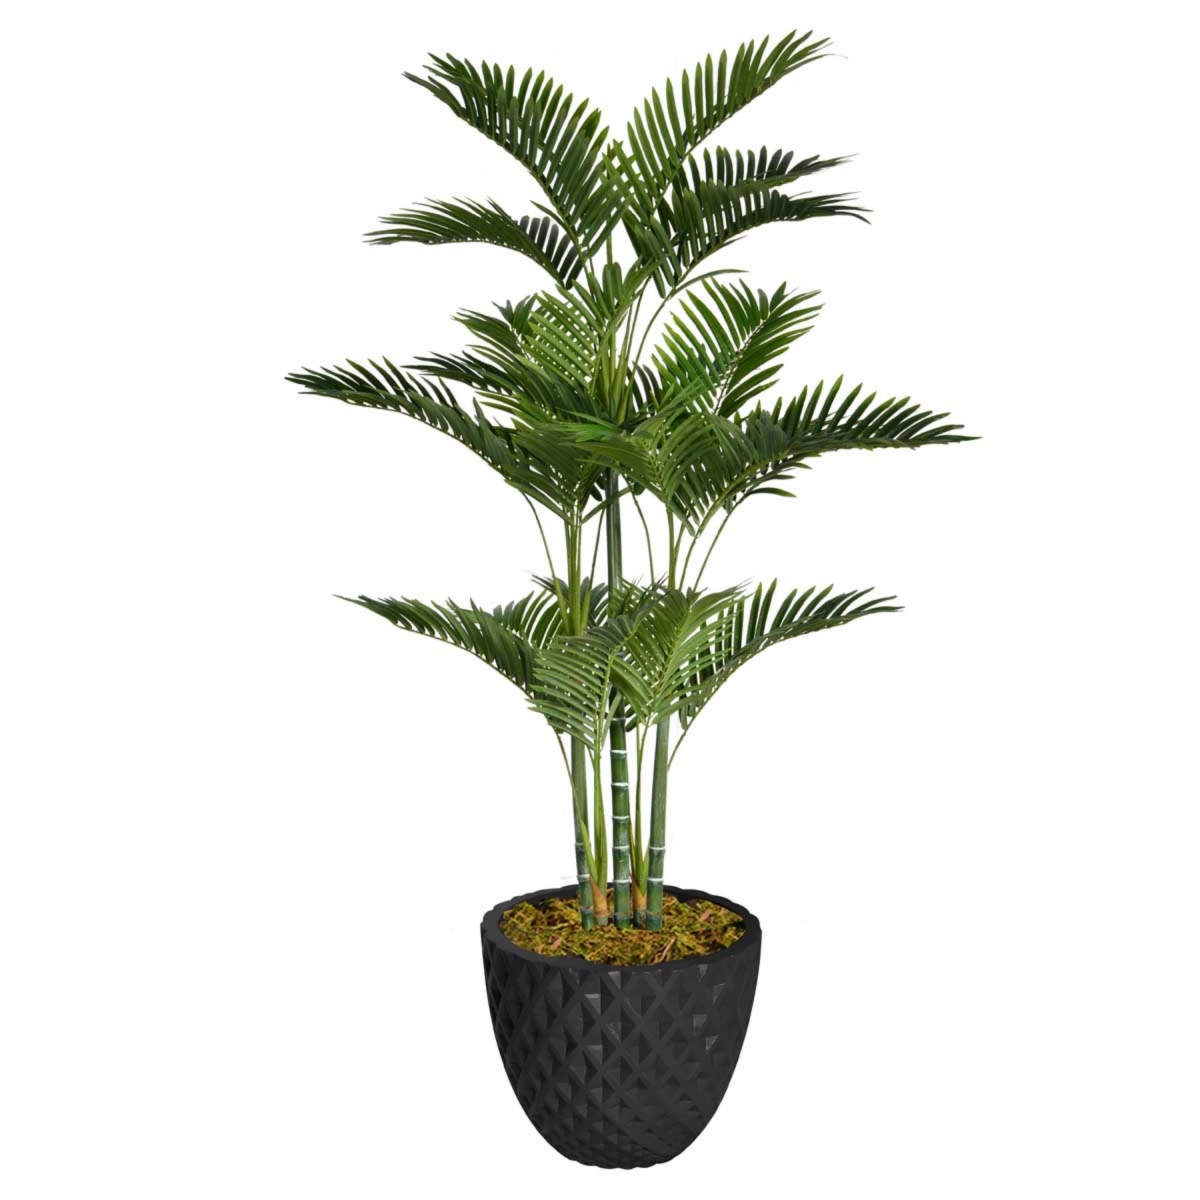 Vhx132205 65.6 In. Tall Palm Tree With Burlap Kit & Fiberstone Planter